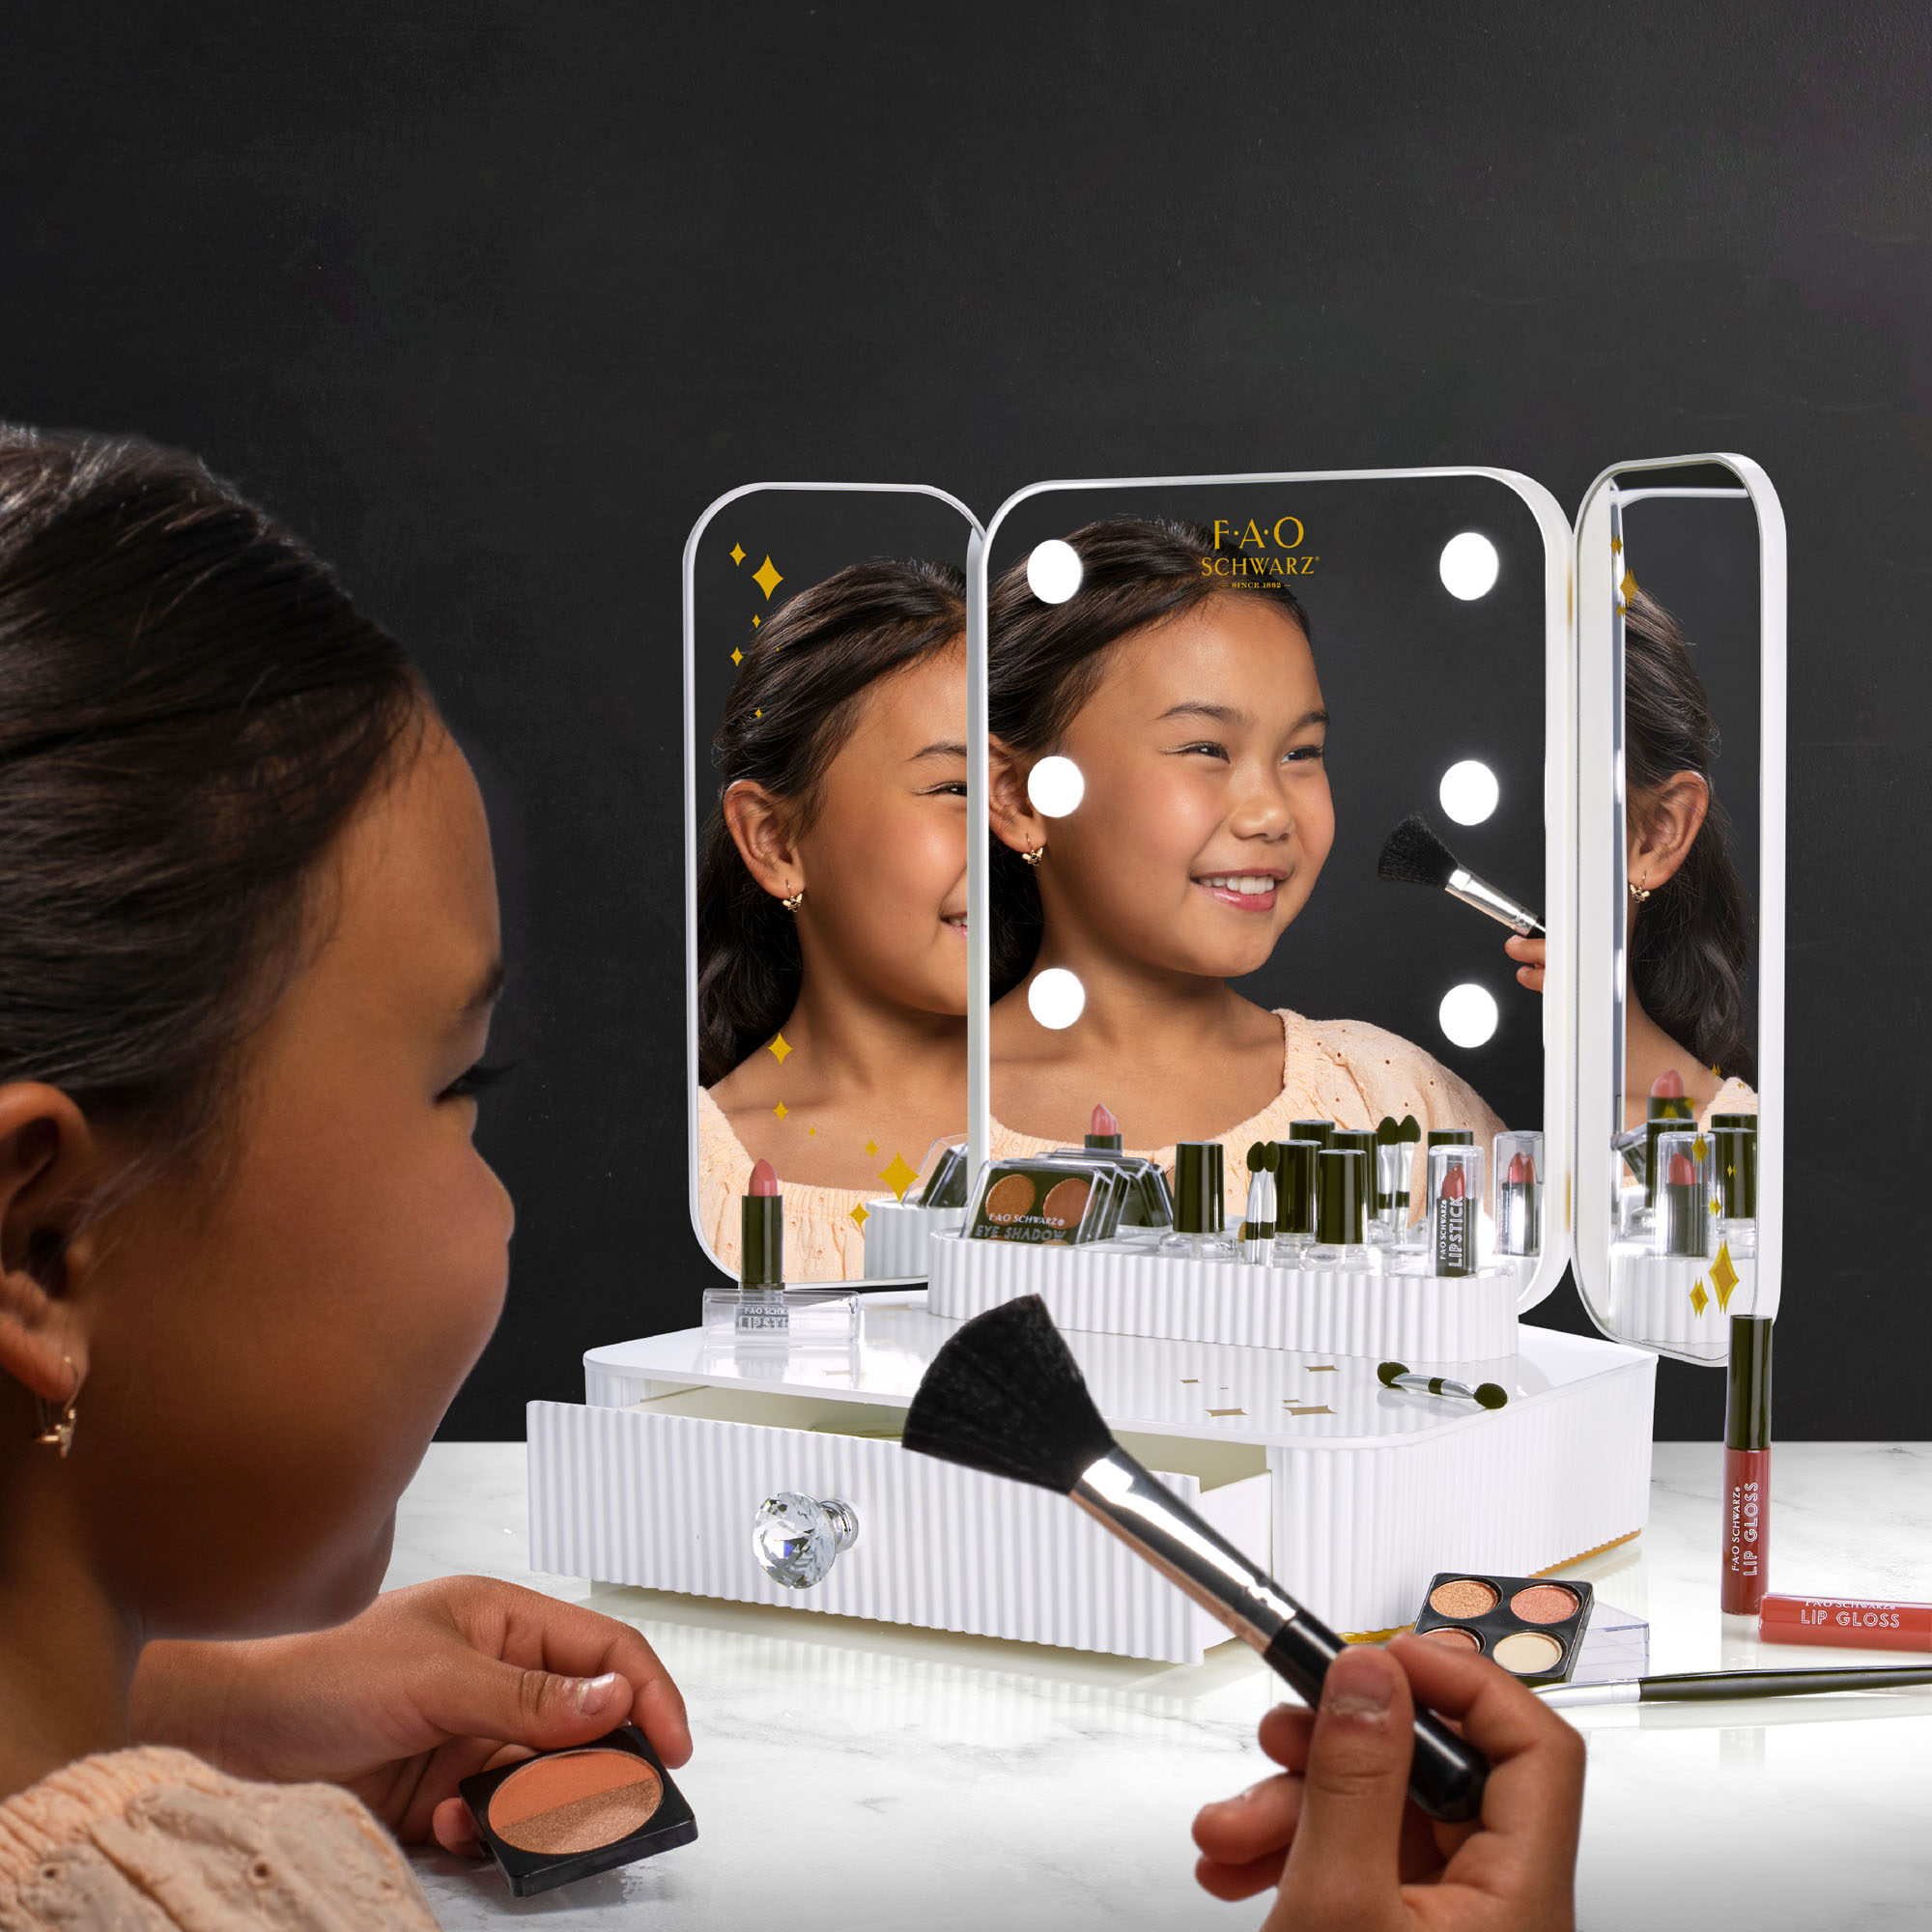 Vanity makeup studio con luci led - FAO Schwarz